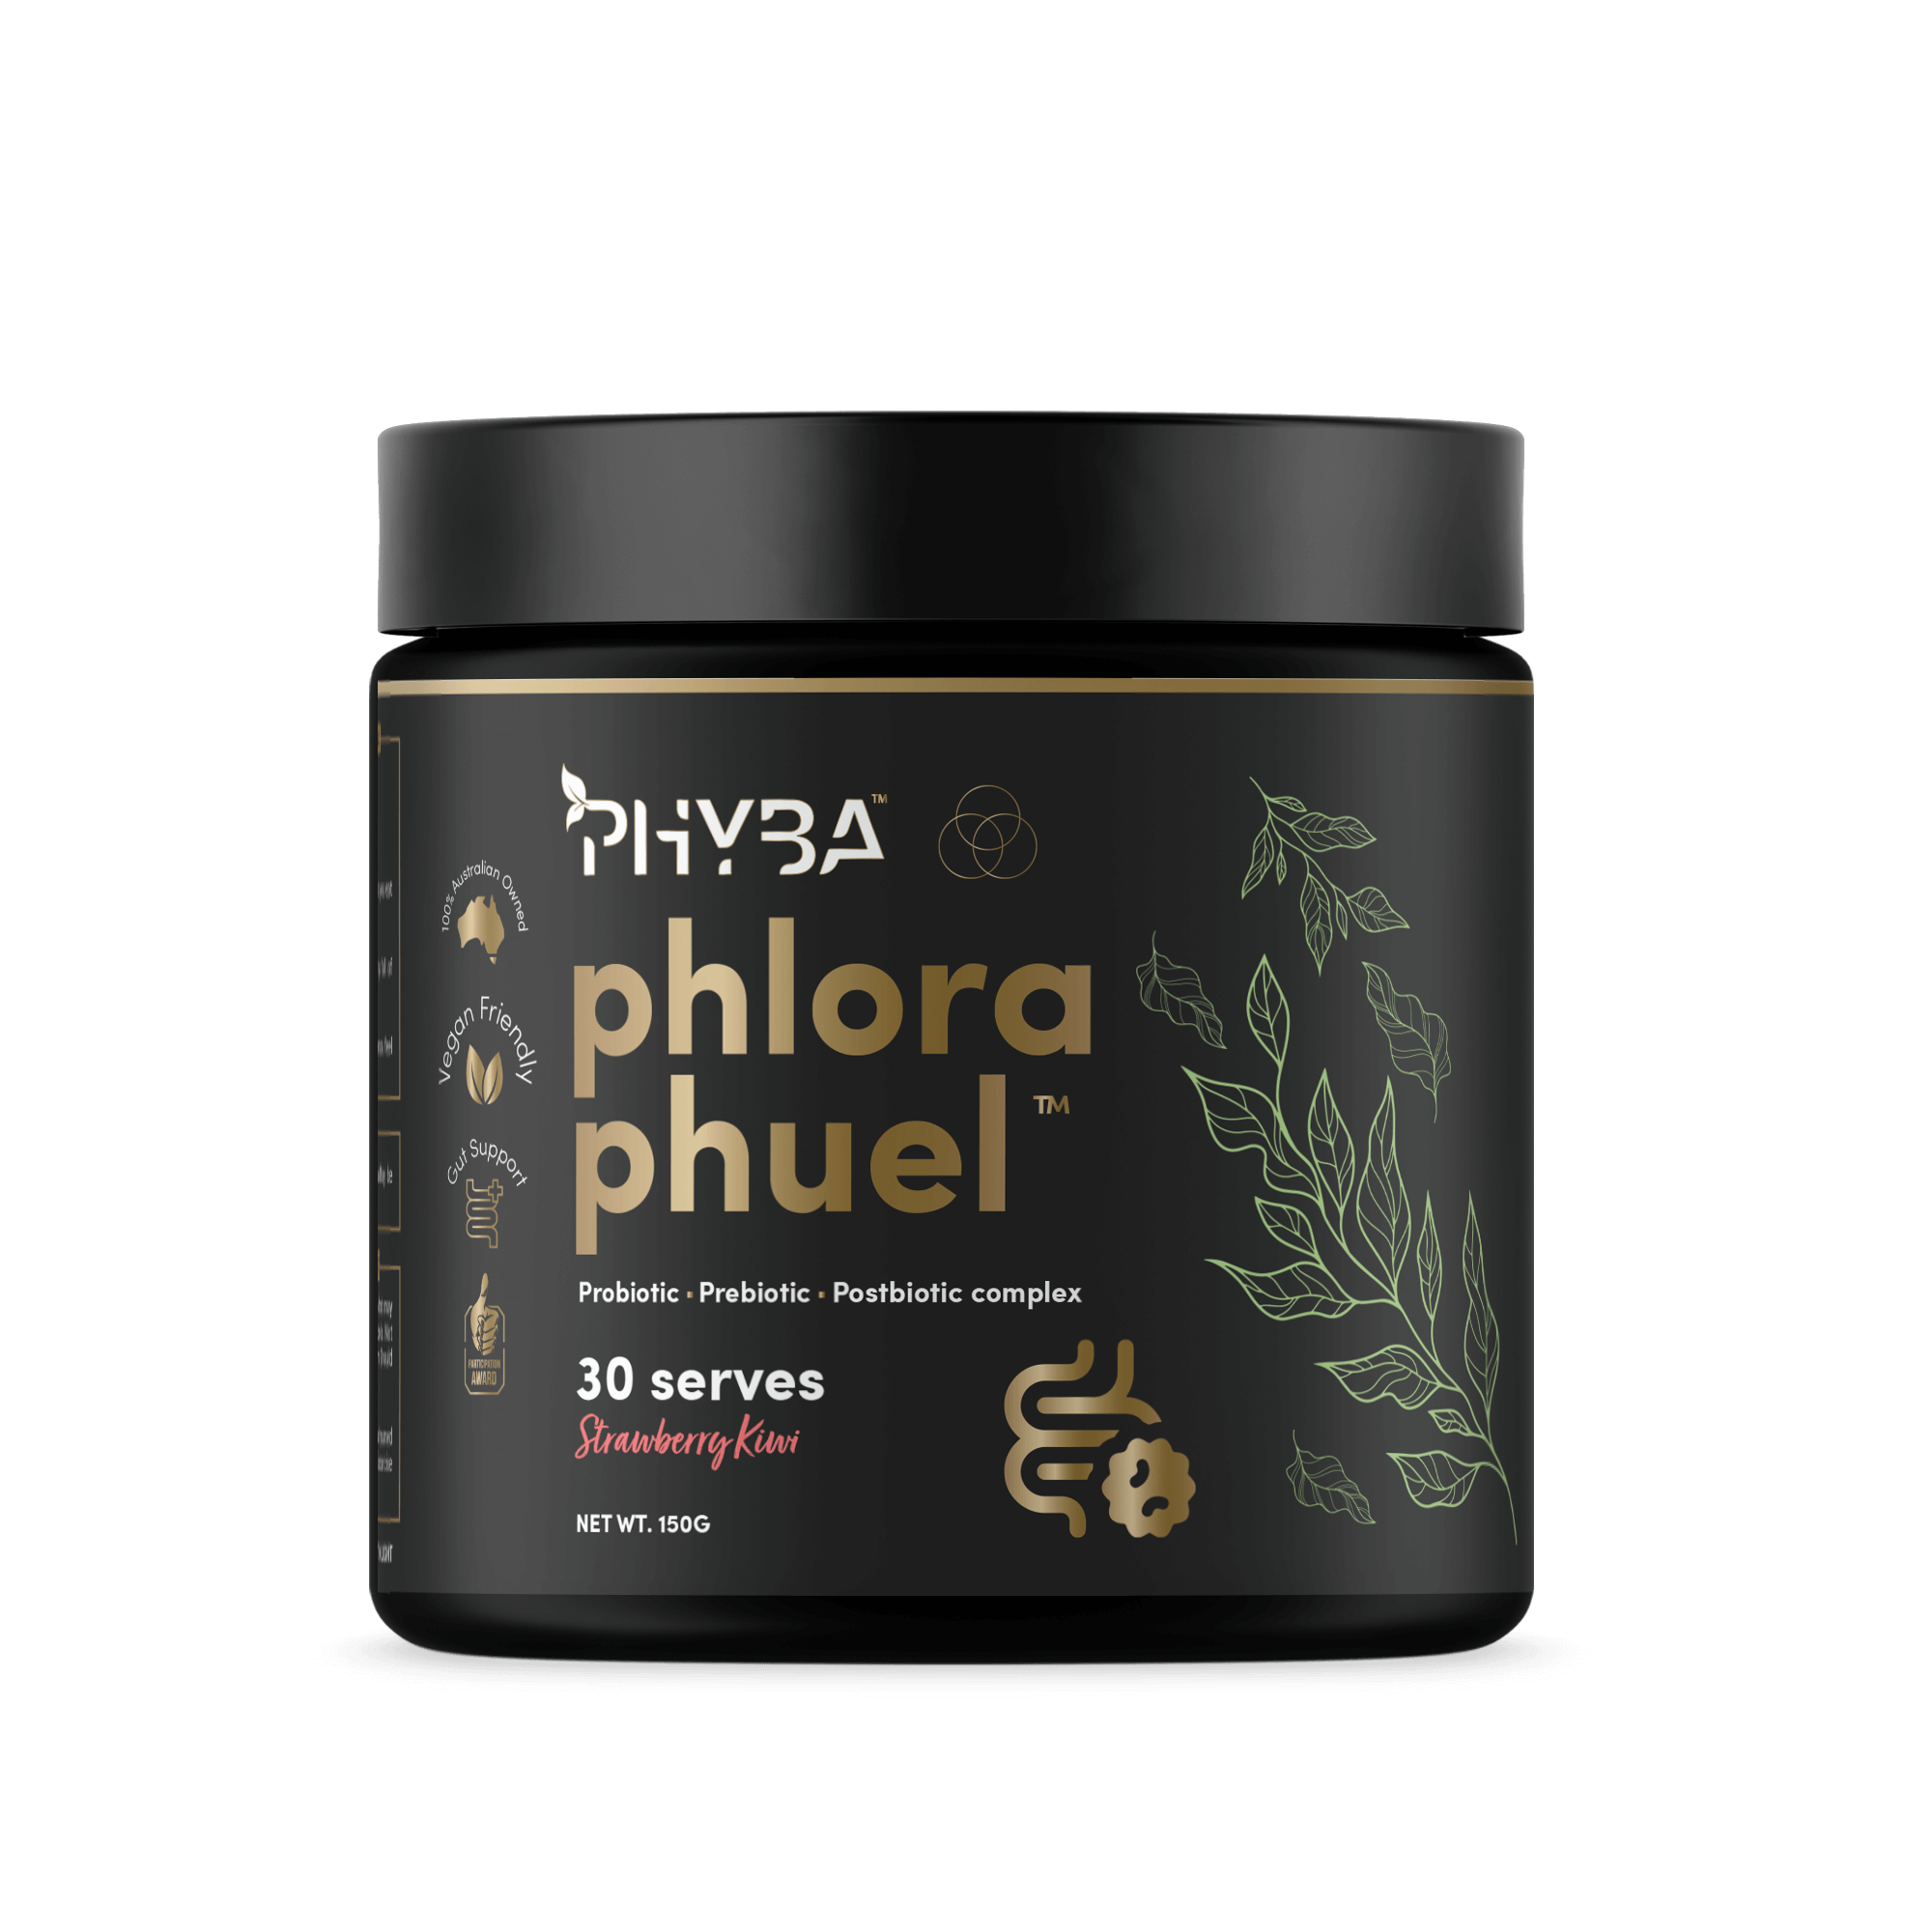 Phlora Phuel